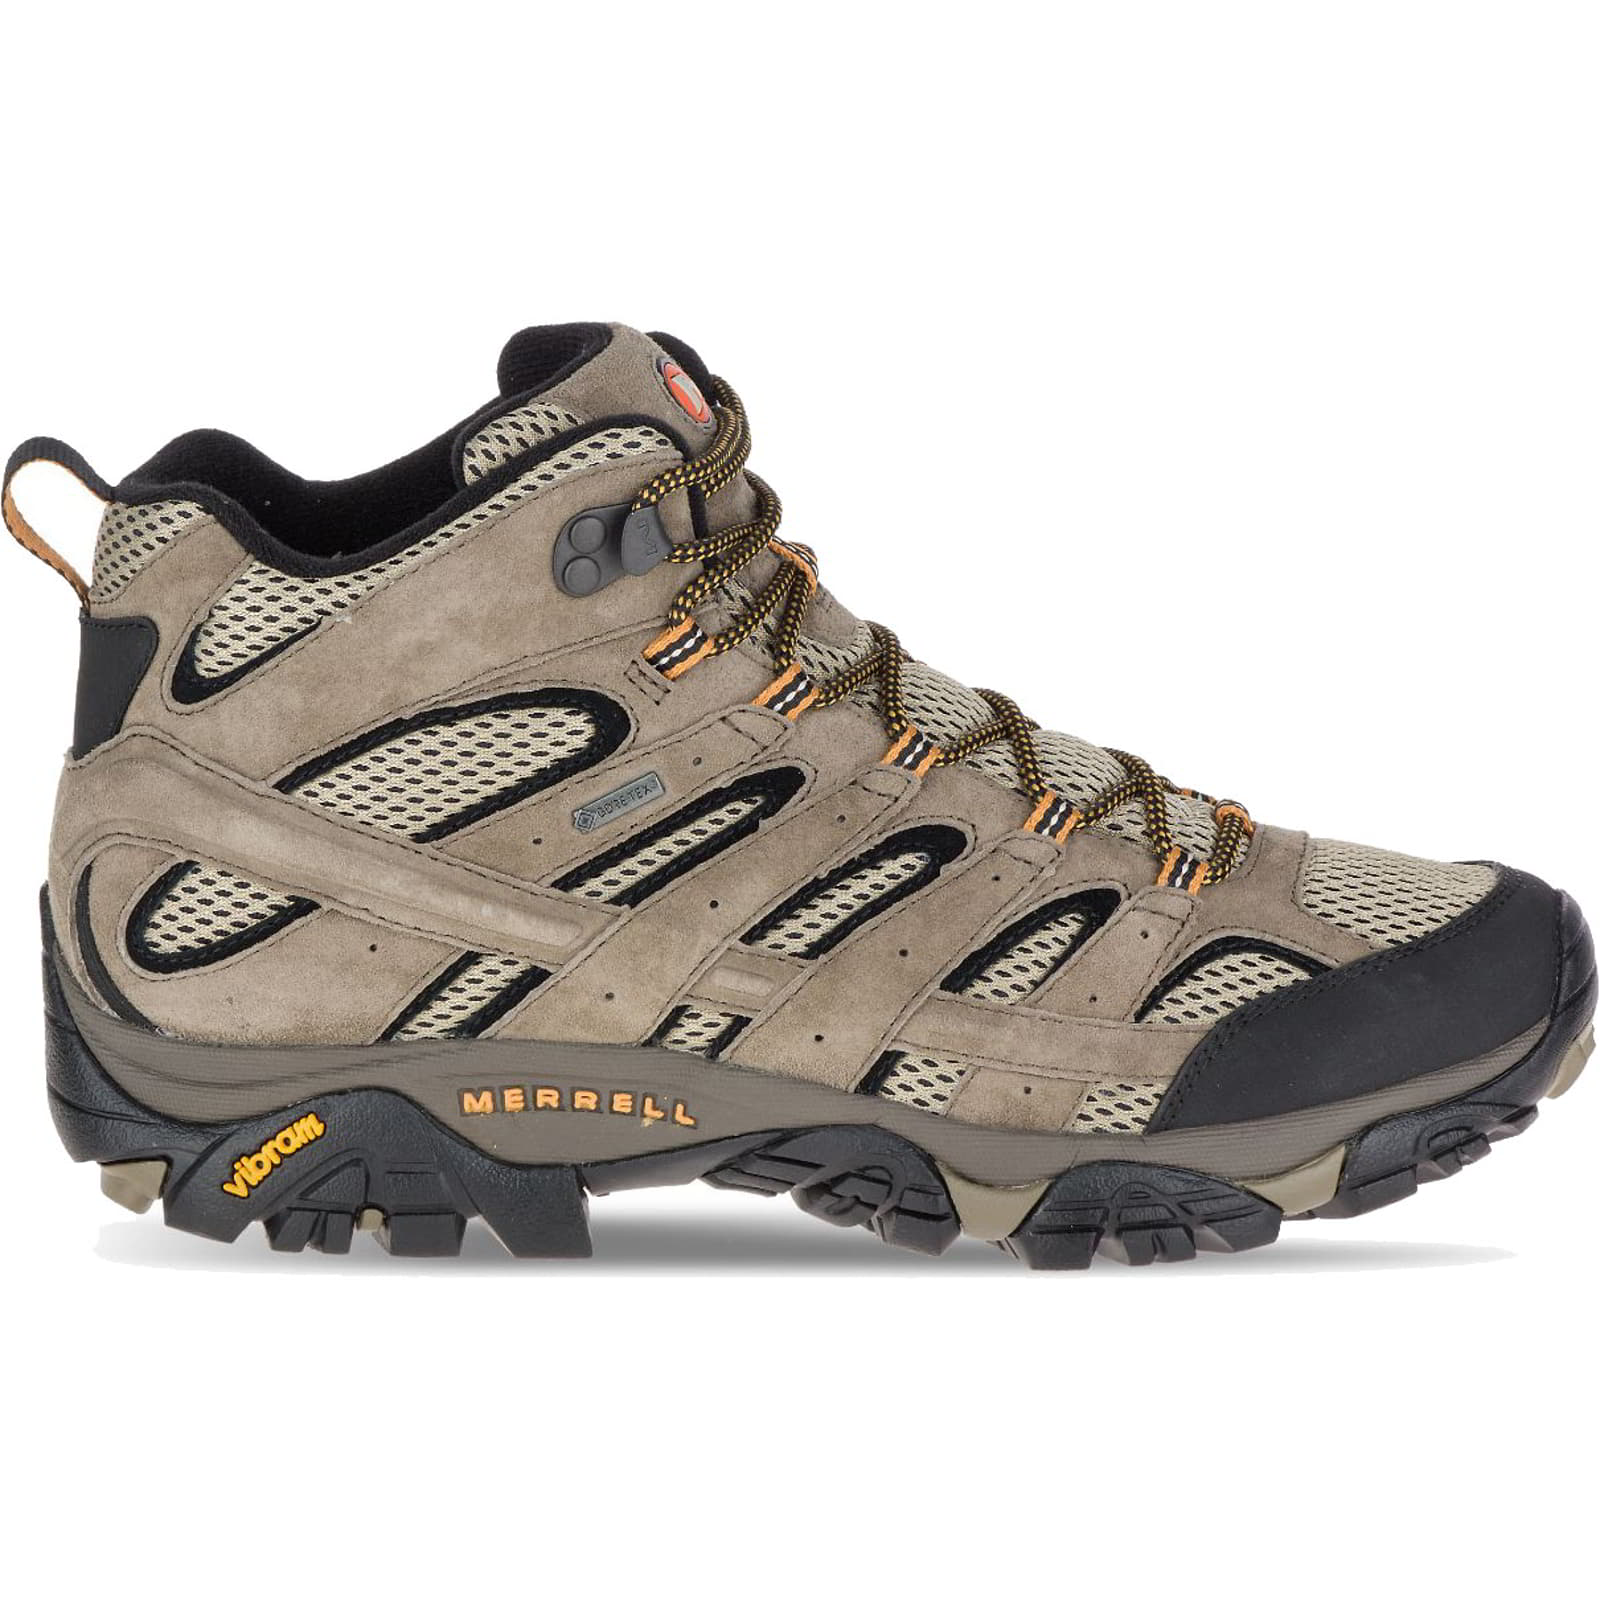 Merrell Men's Moab 2 Mid GTX Waterproof Walking Hiking Boots - UK 8.5